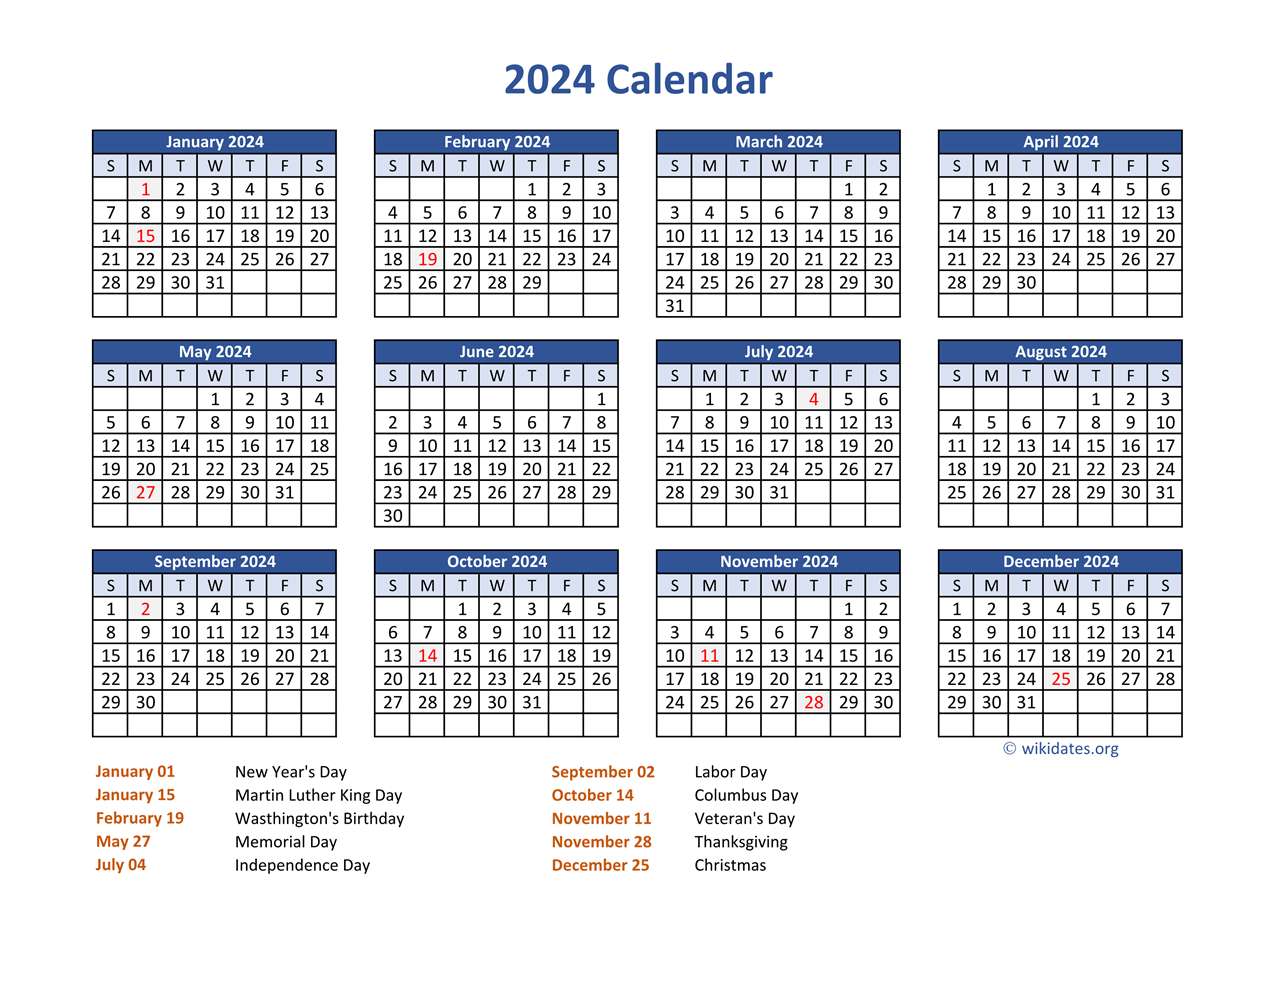 Pdf Calendar 2024 With Federal Holidays | Wikidates for 2024 Calendar With Holidays Usa Printable